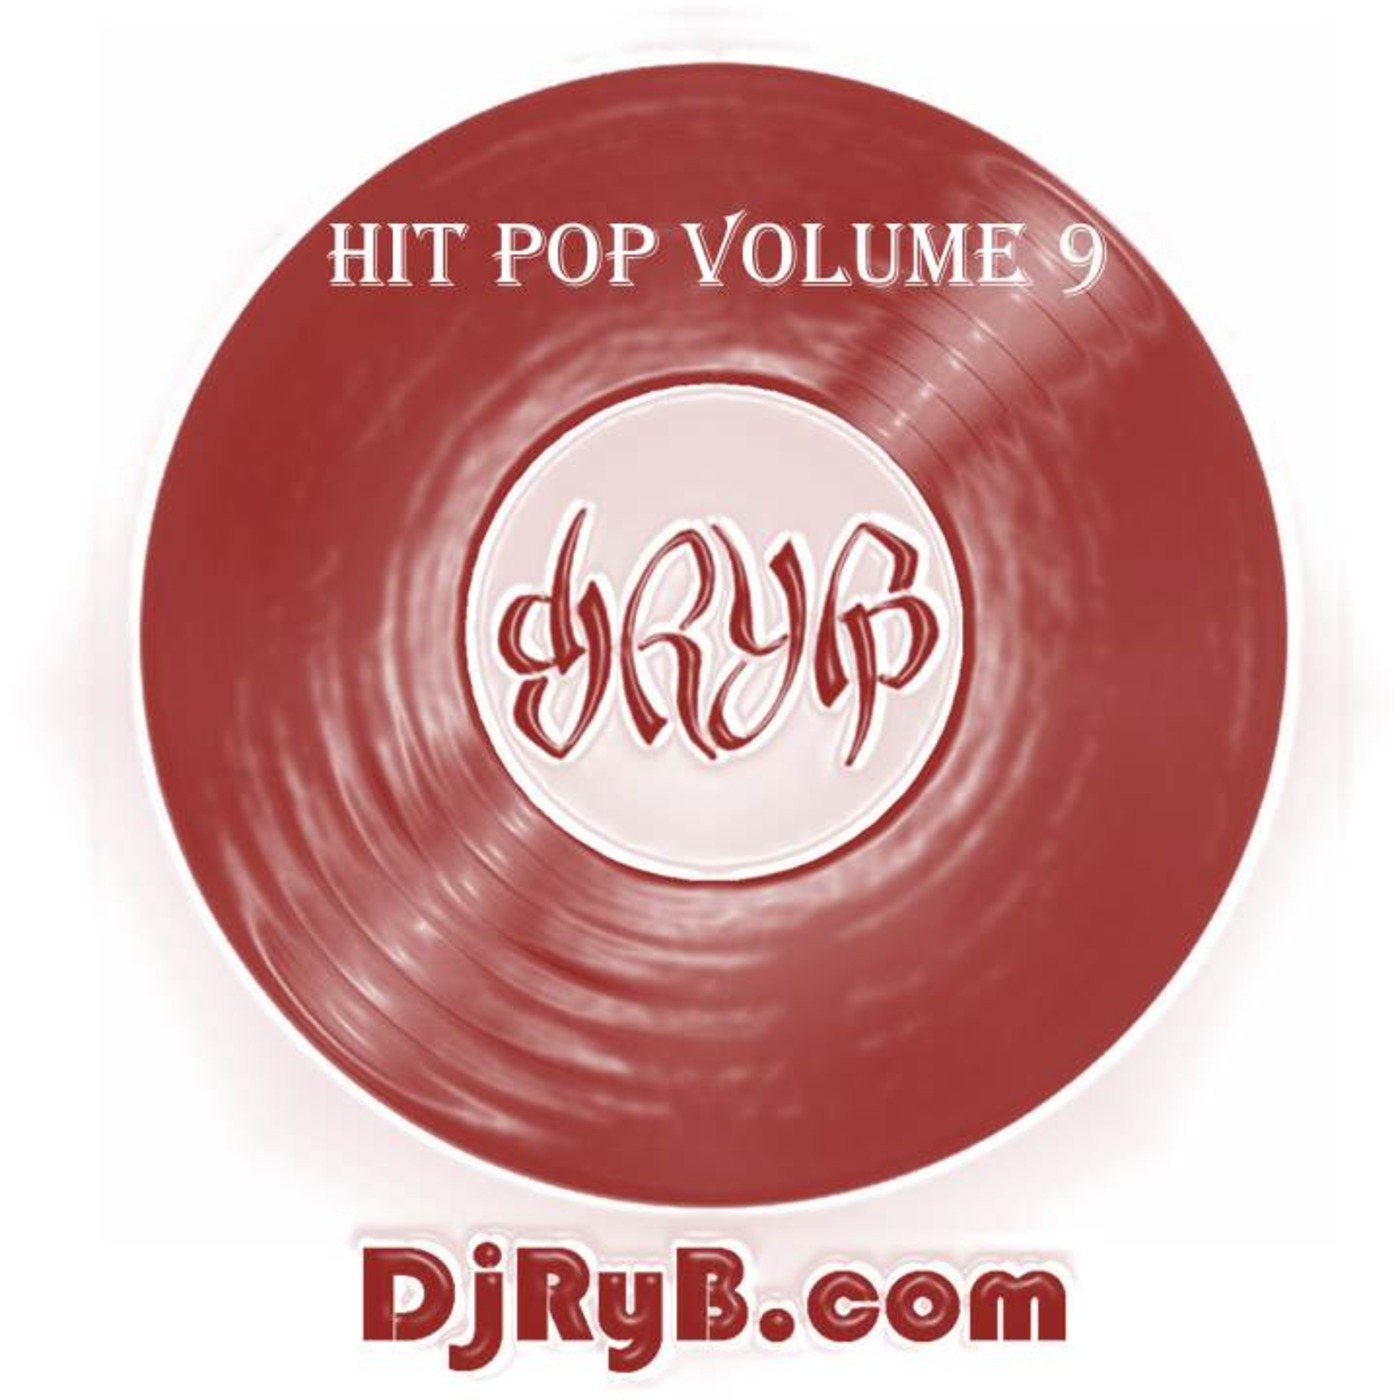 Hit Pop Volume 9 - Dj RyB